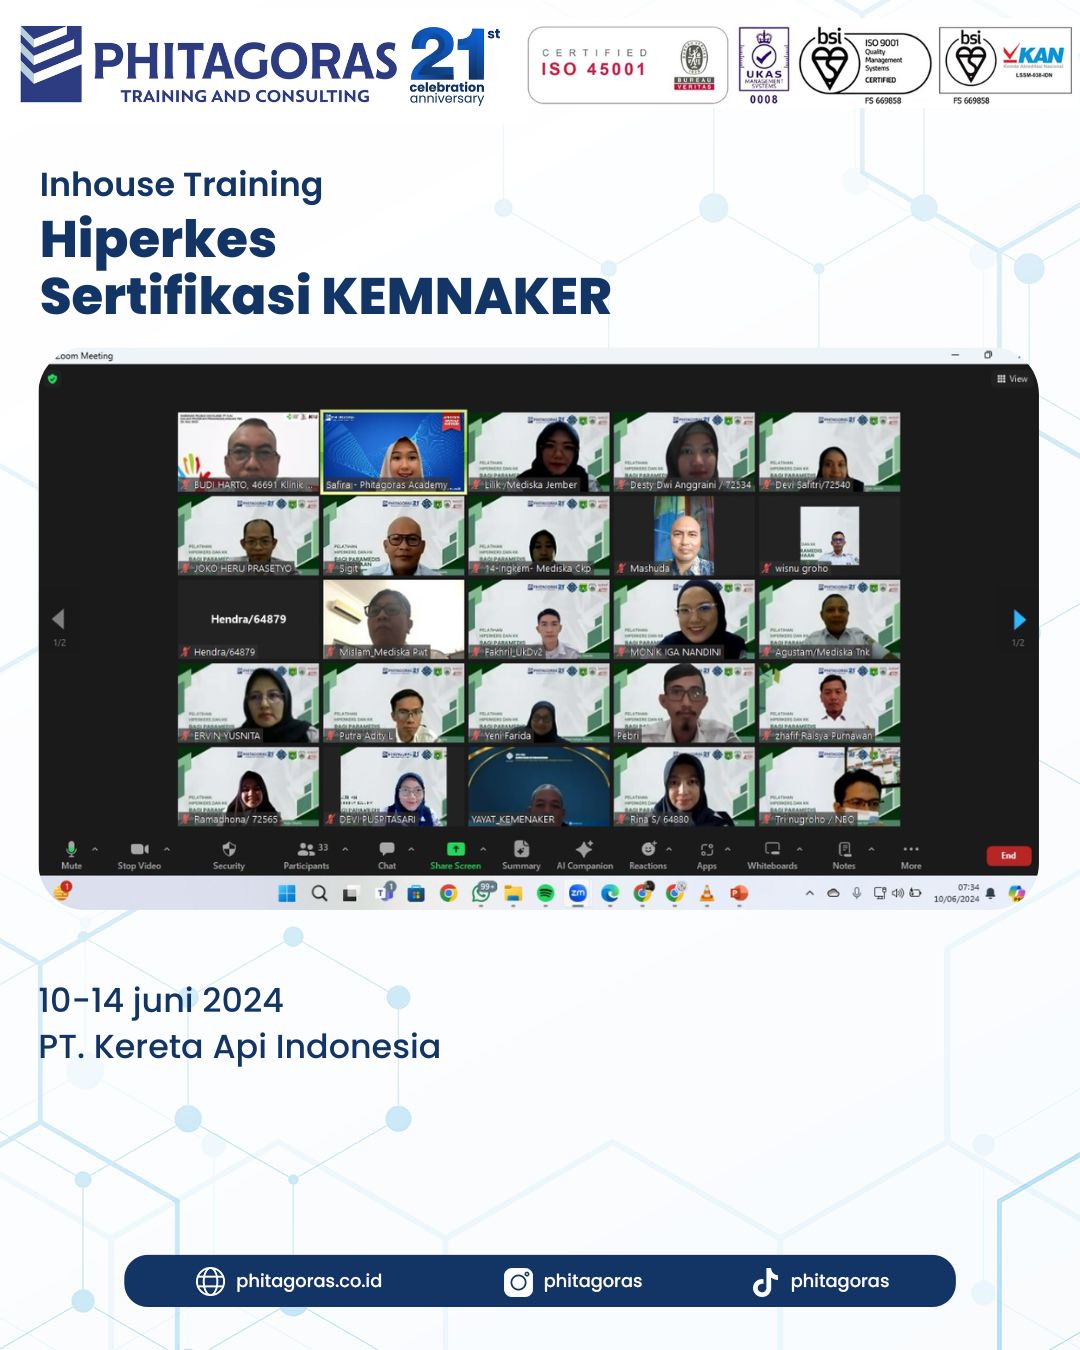 Inhouse Training Hiperkes Sertifikasi KEMNAKER - PT. Kereta Api Indonesia 10-14 juni 2024